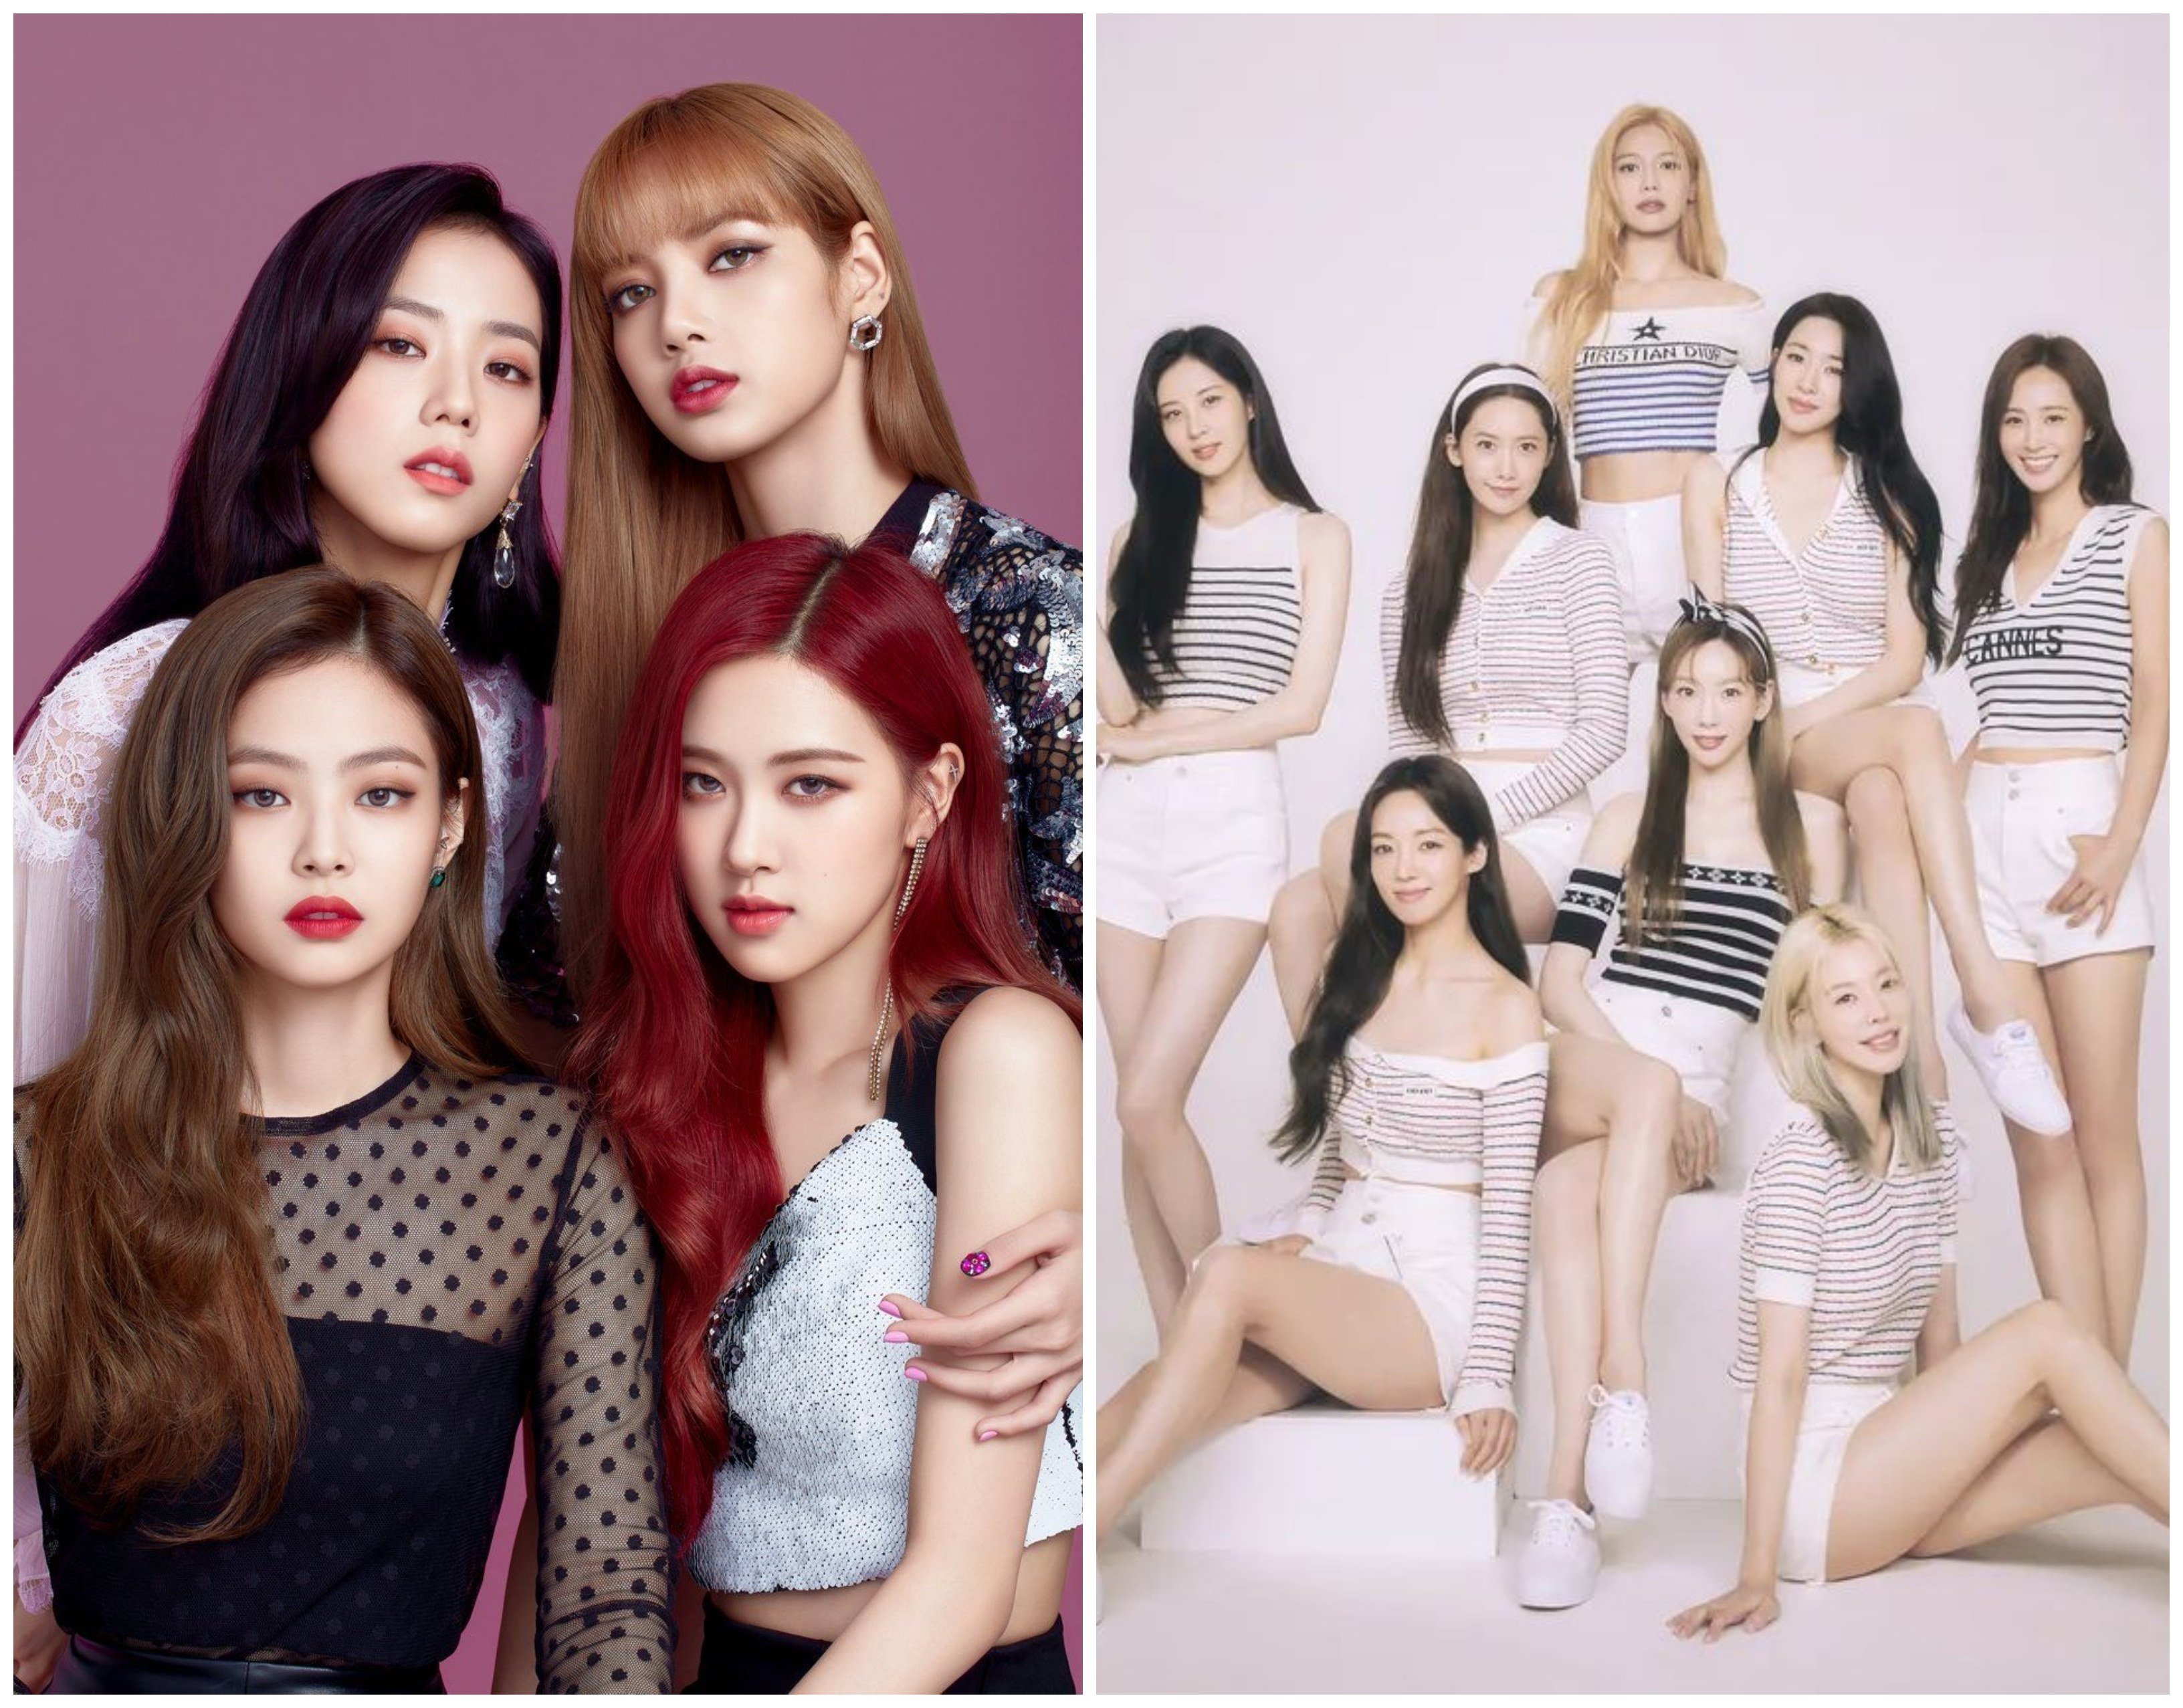 Blackpink and Girls’ Generation are among K-pop’s biggest girl groups. Photos: @olens_official, @girlsgeneration/Instagram